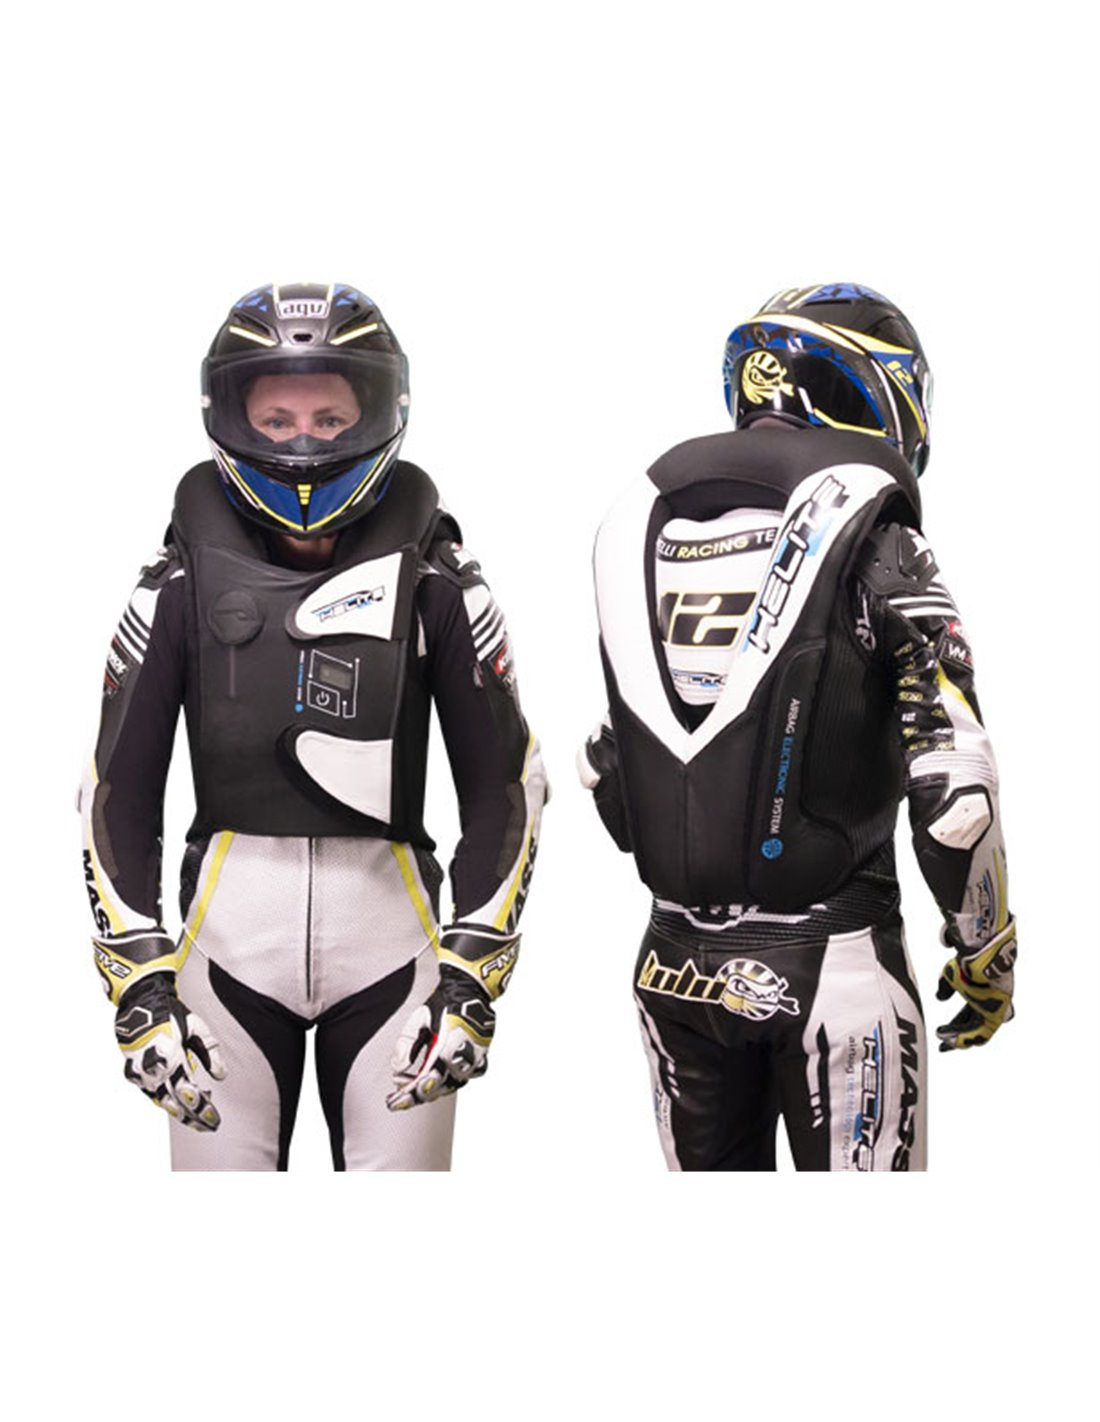 GP Argentina MotoGP 2023: Llega Aspar Air, el chaleco con airbag español